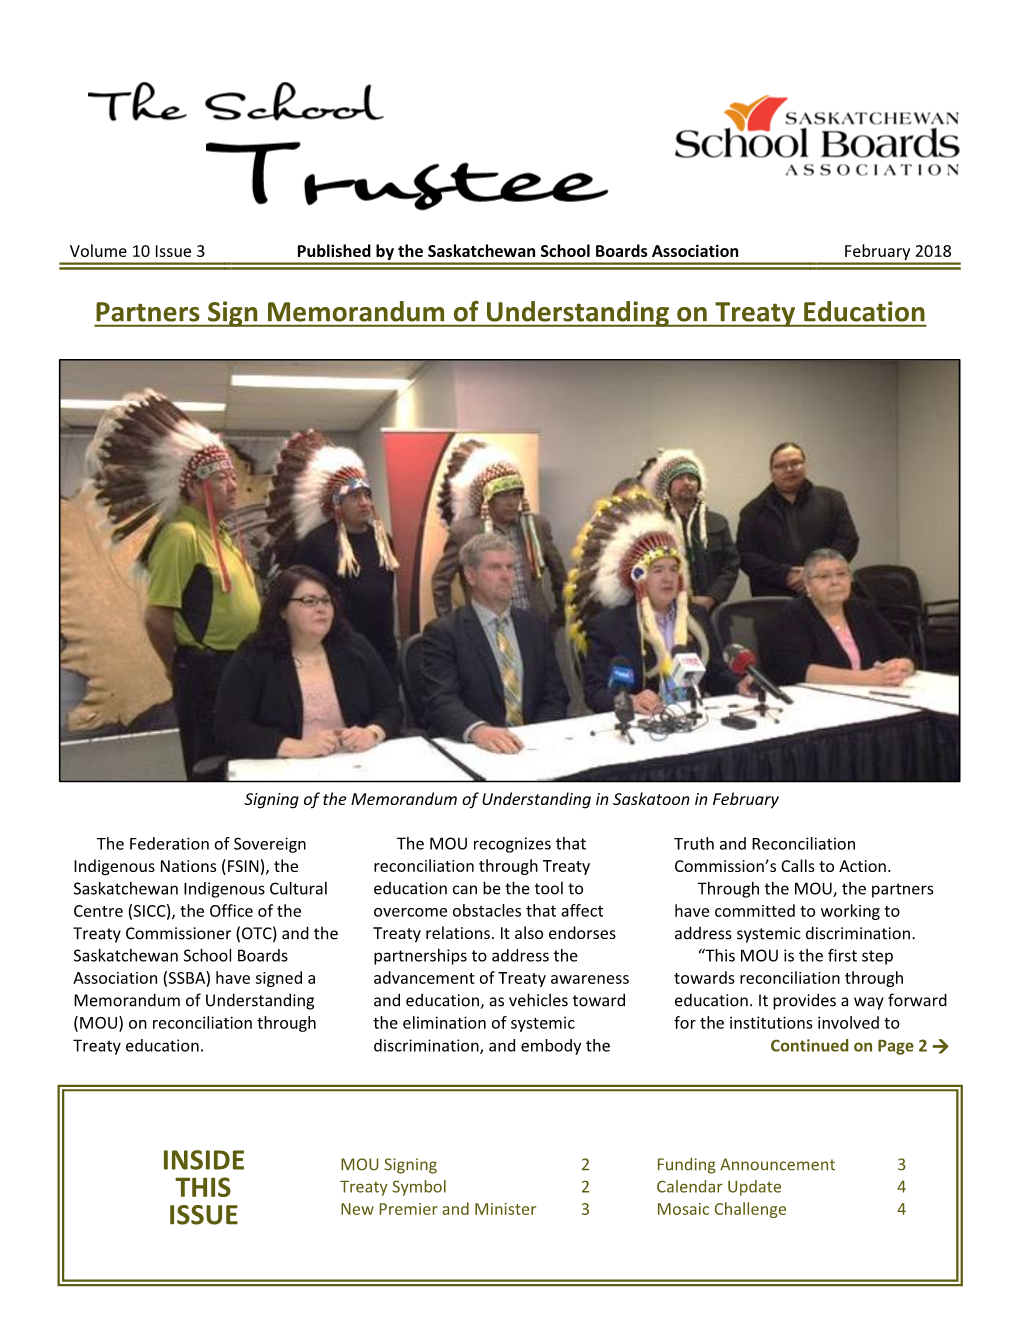 INSIDE THIS ISSUE Partners Sign Memorandum of Understanding on Treaty Education